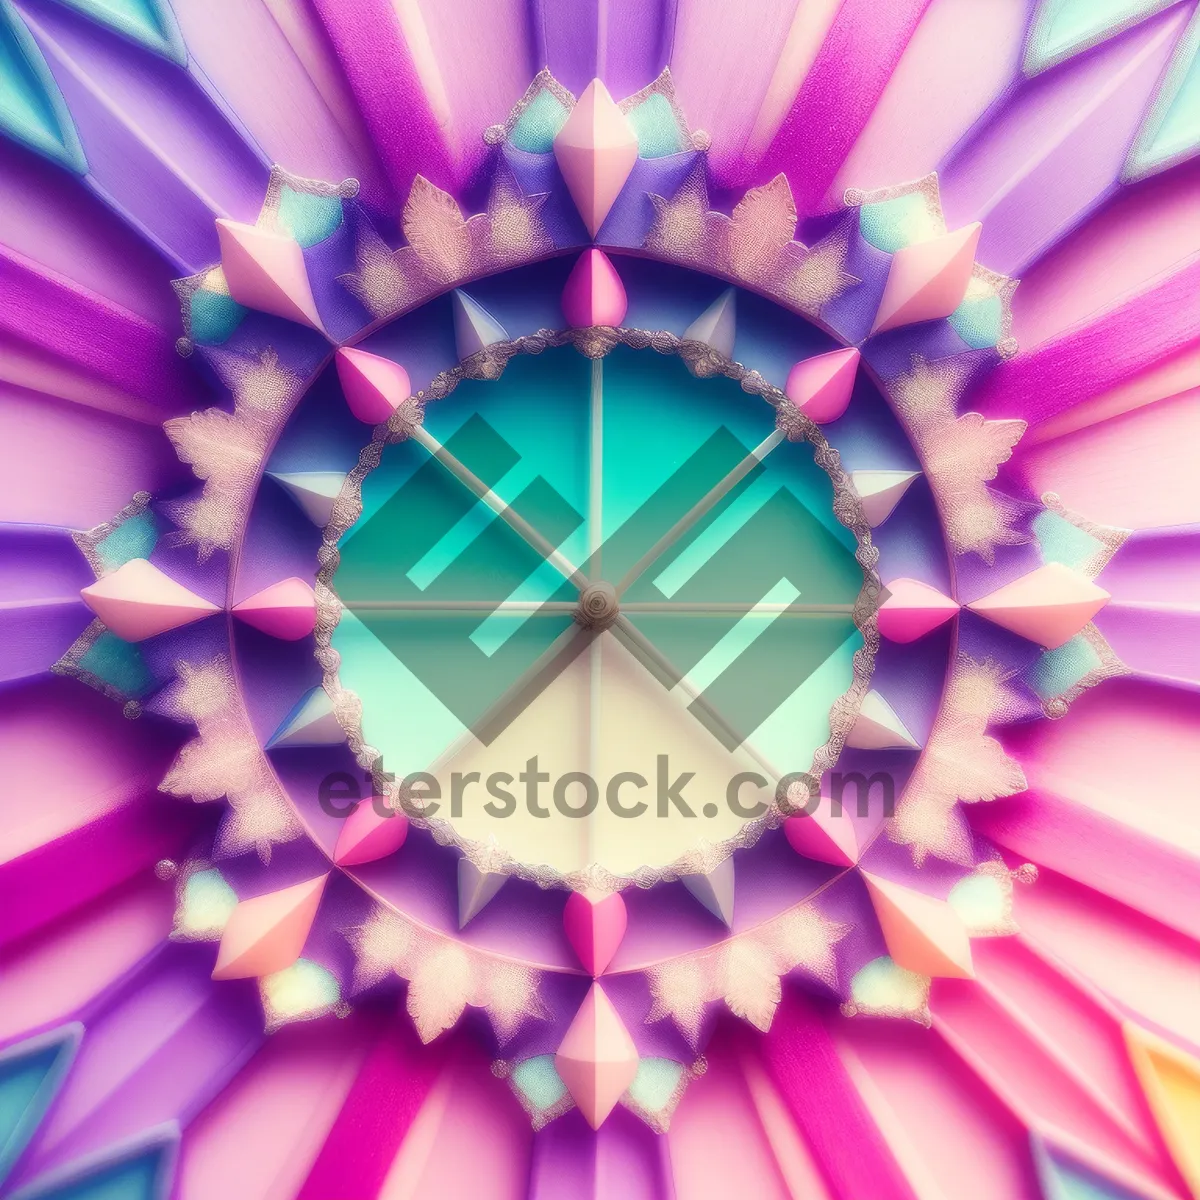 Picture of Colorful Fractal Light - Digital Art Wallpaper